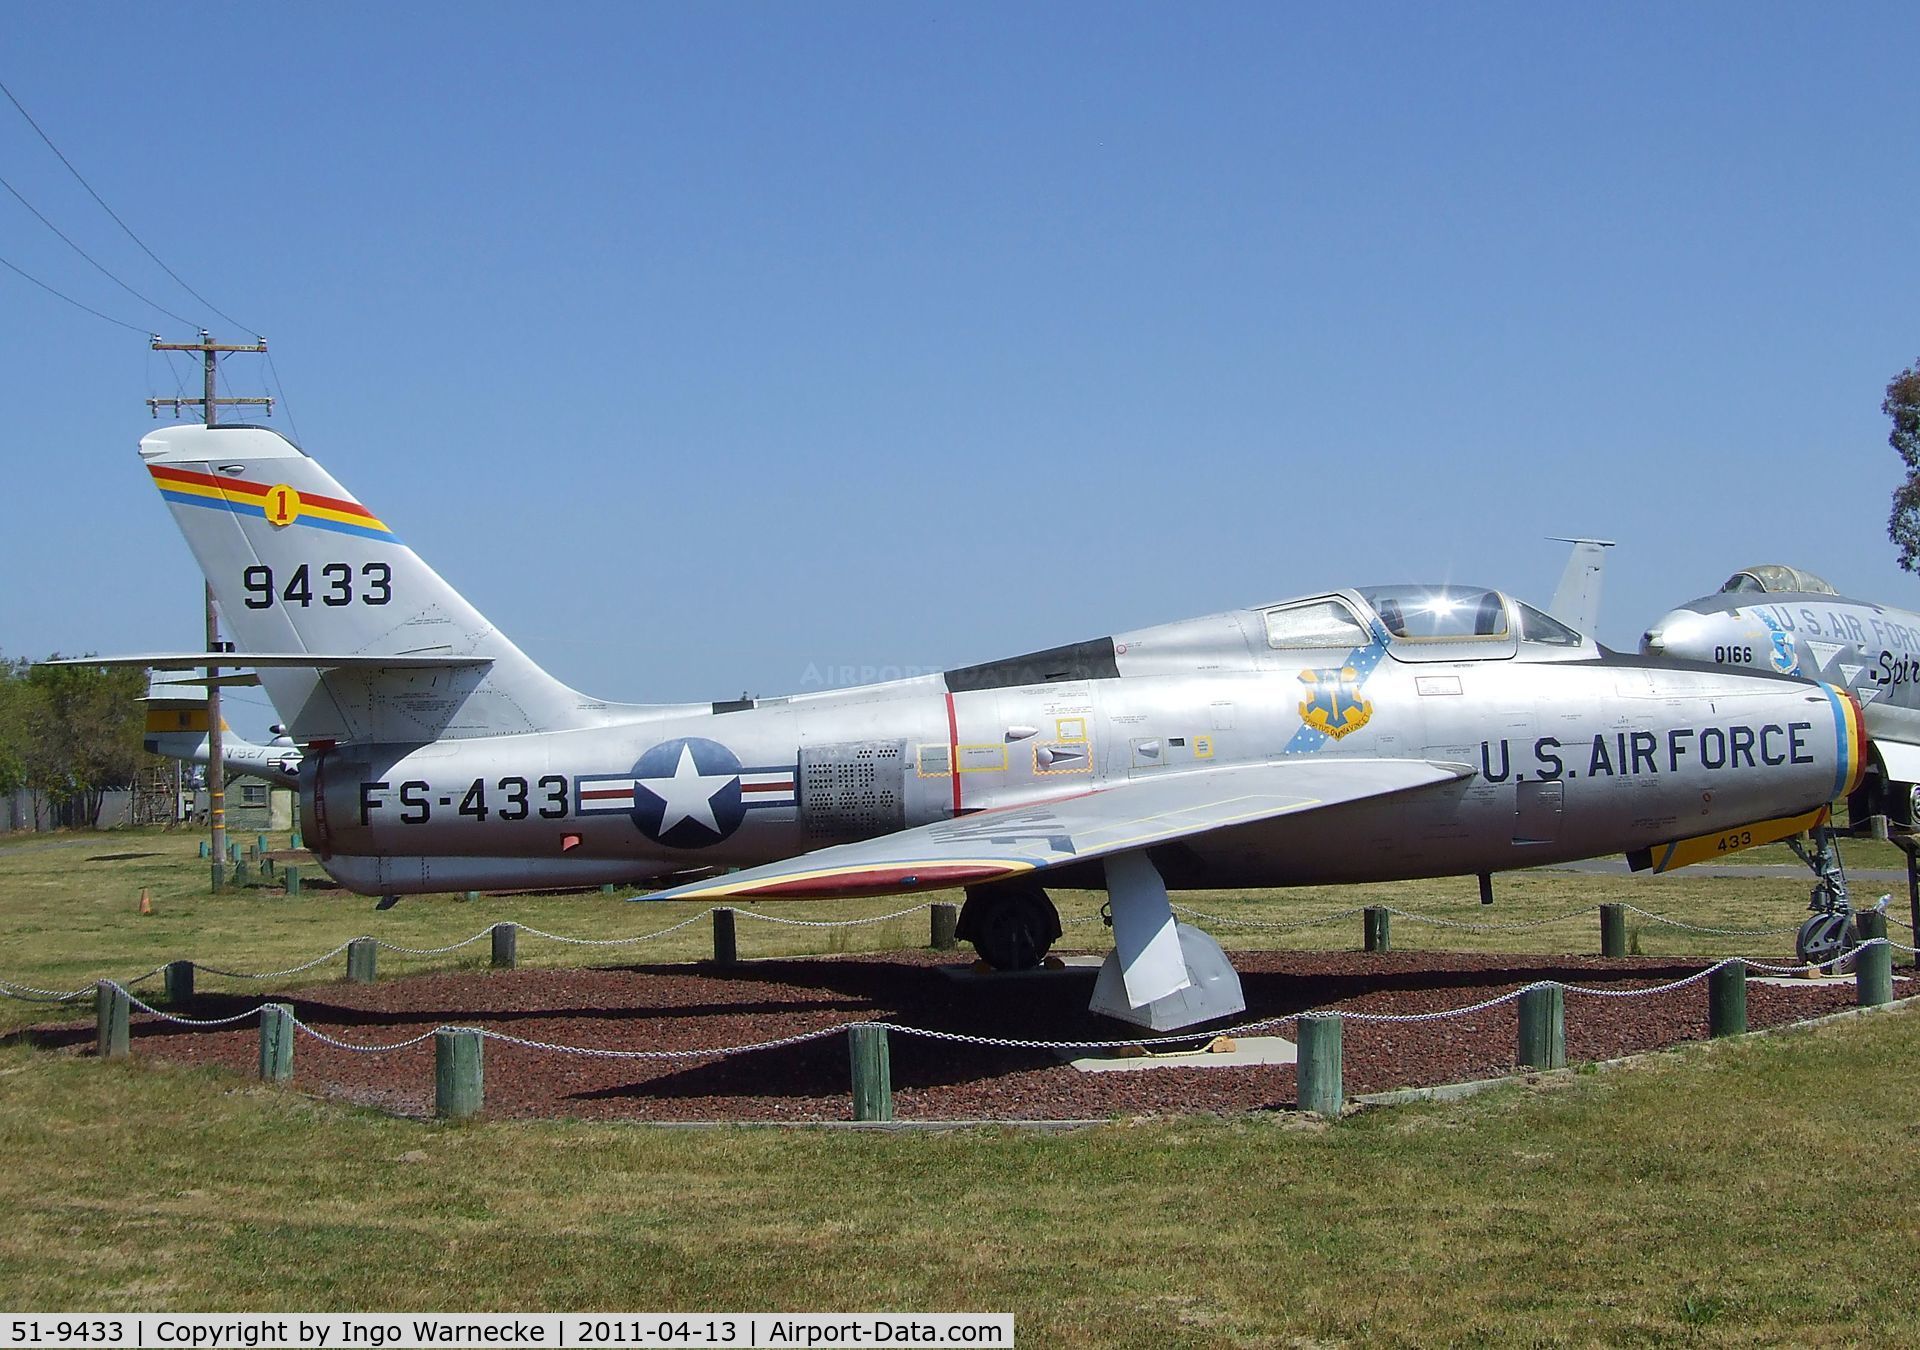 51-9433, 1951 General Motors F-84F Thunderstreak C/N Not found 51-9433, Republic F-84F Thunderstreak at the Castle Air Museum, Atwater CA